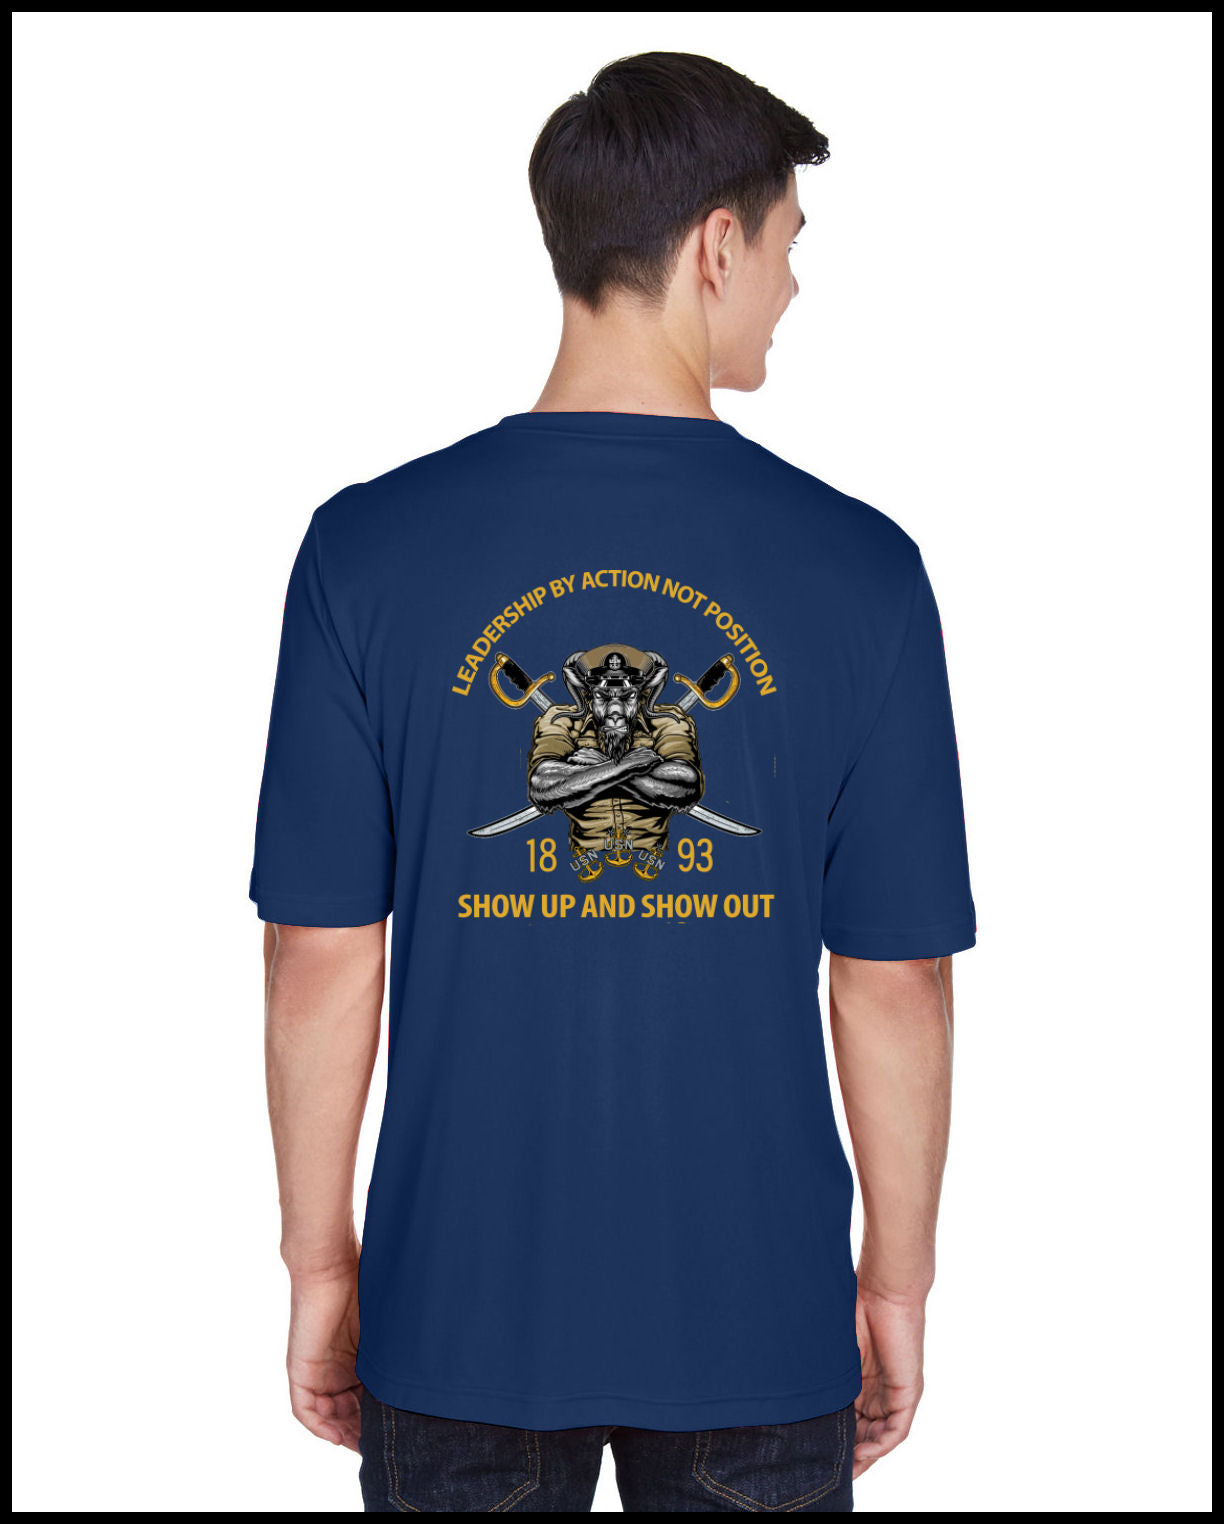 Navy Blue Chief Pride & Leadership Dry-Fit T-Shirt